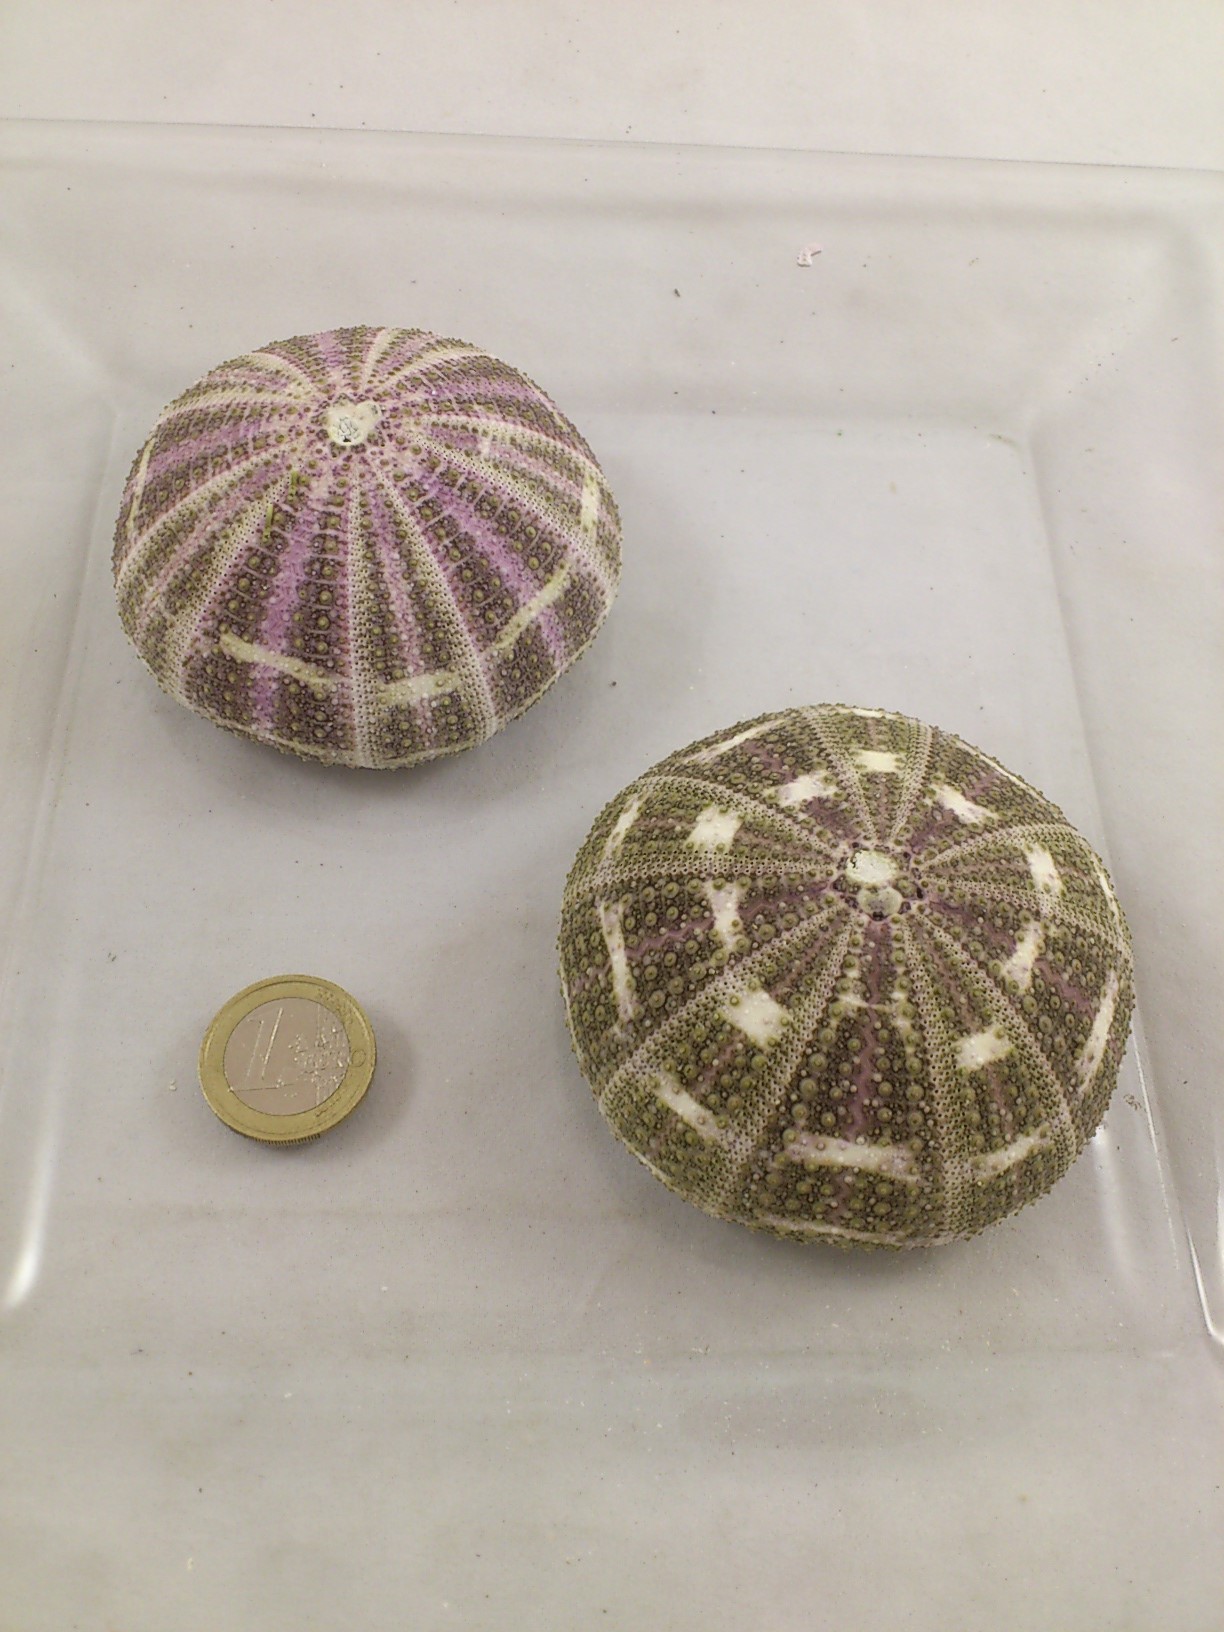 Seeigel 6-8 cm (Sea urchin alfonso) 2 st.